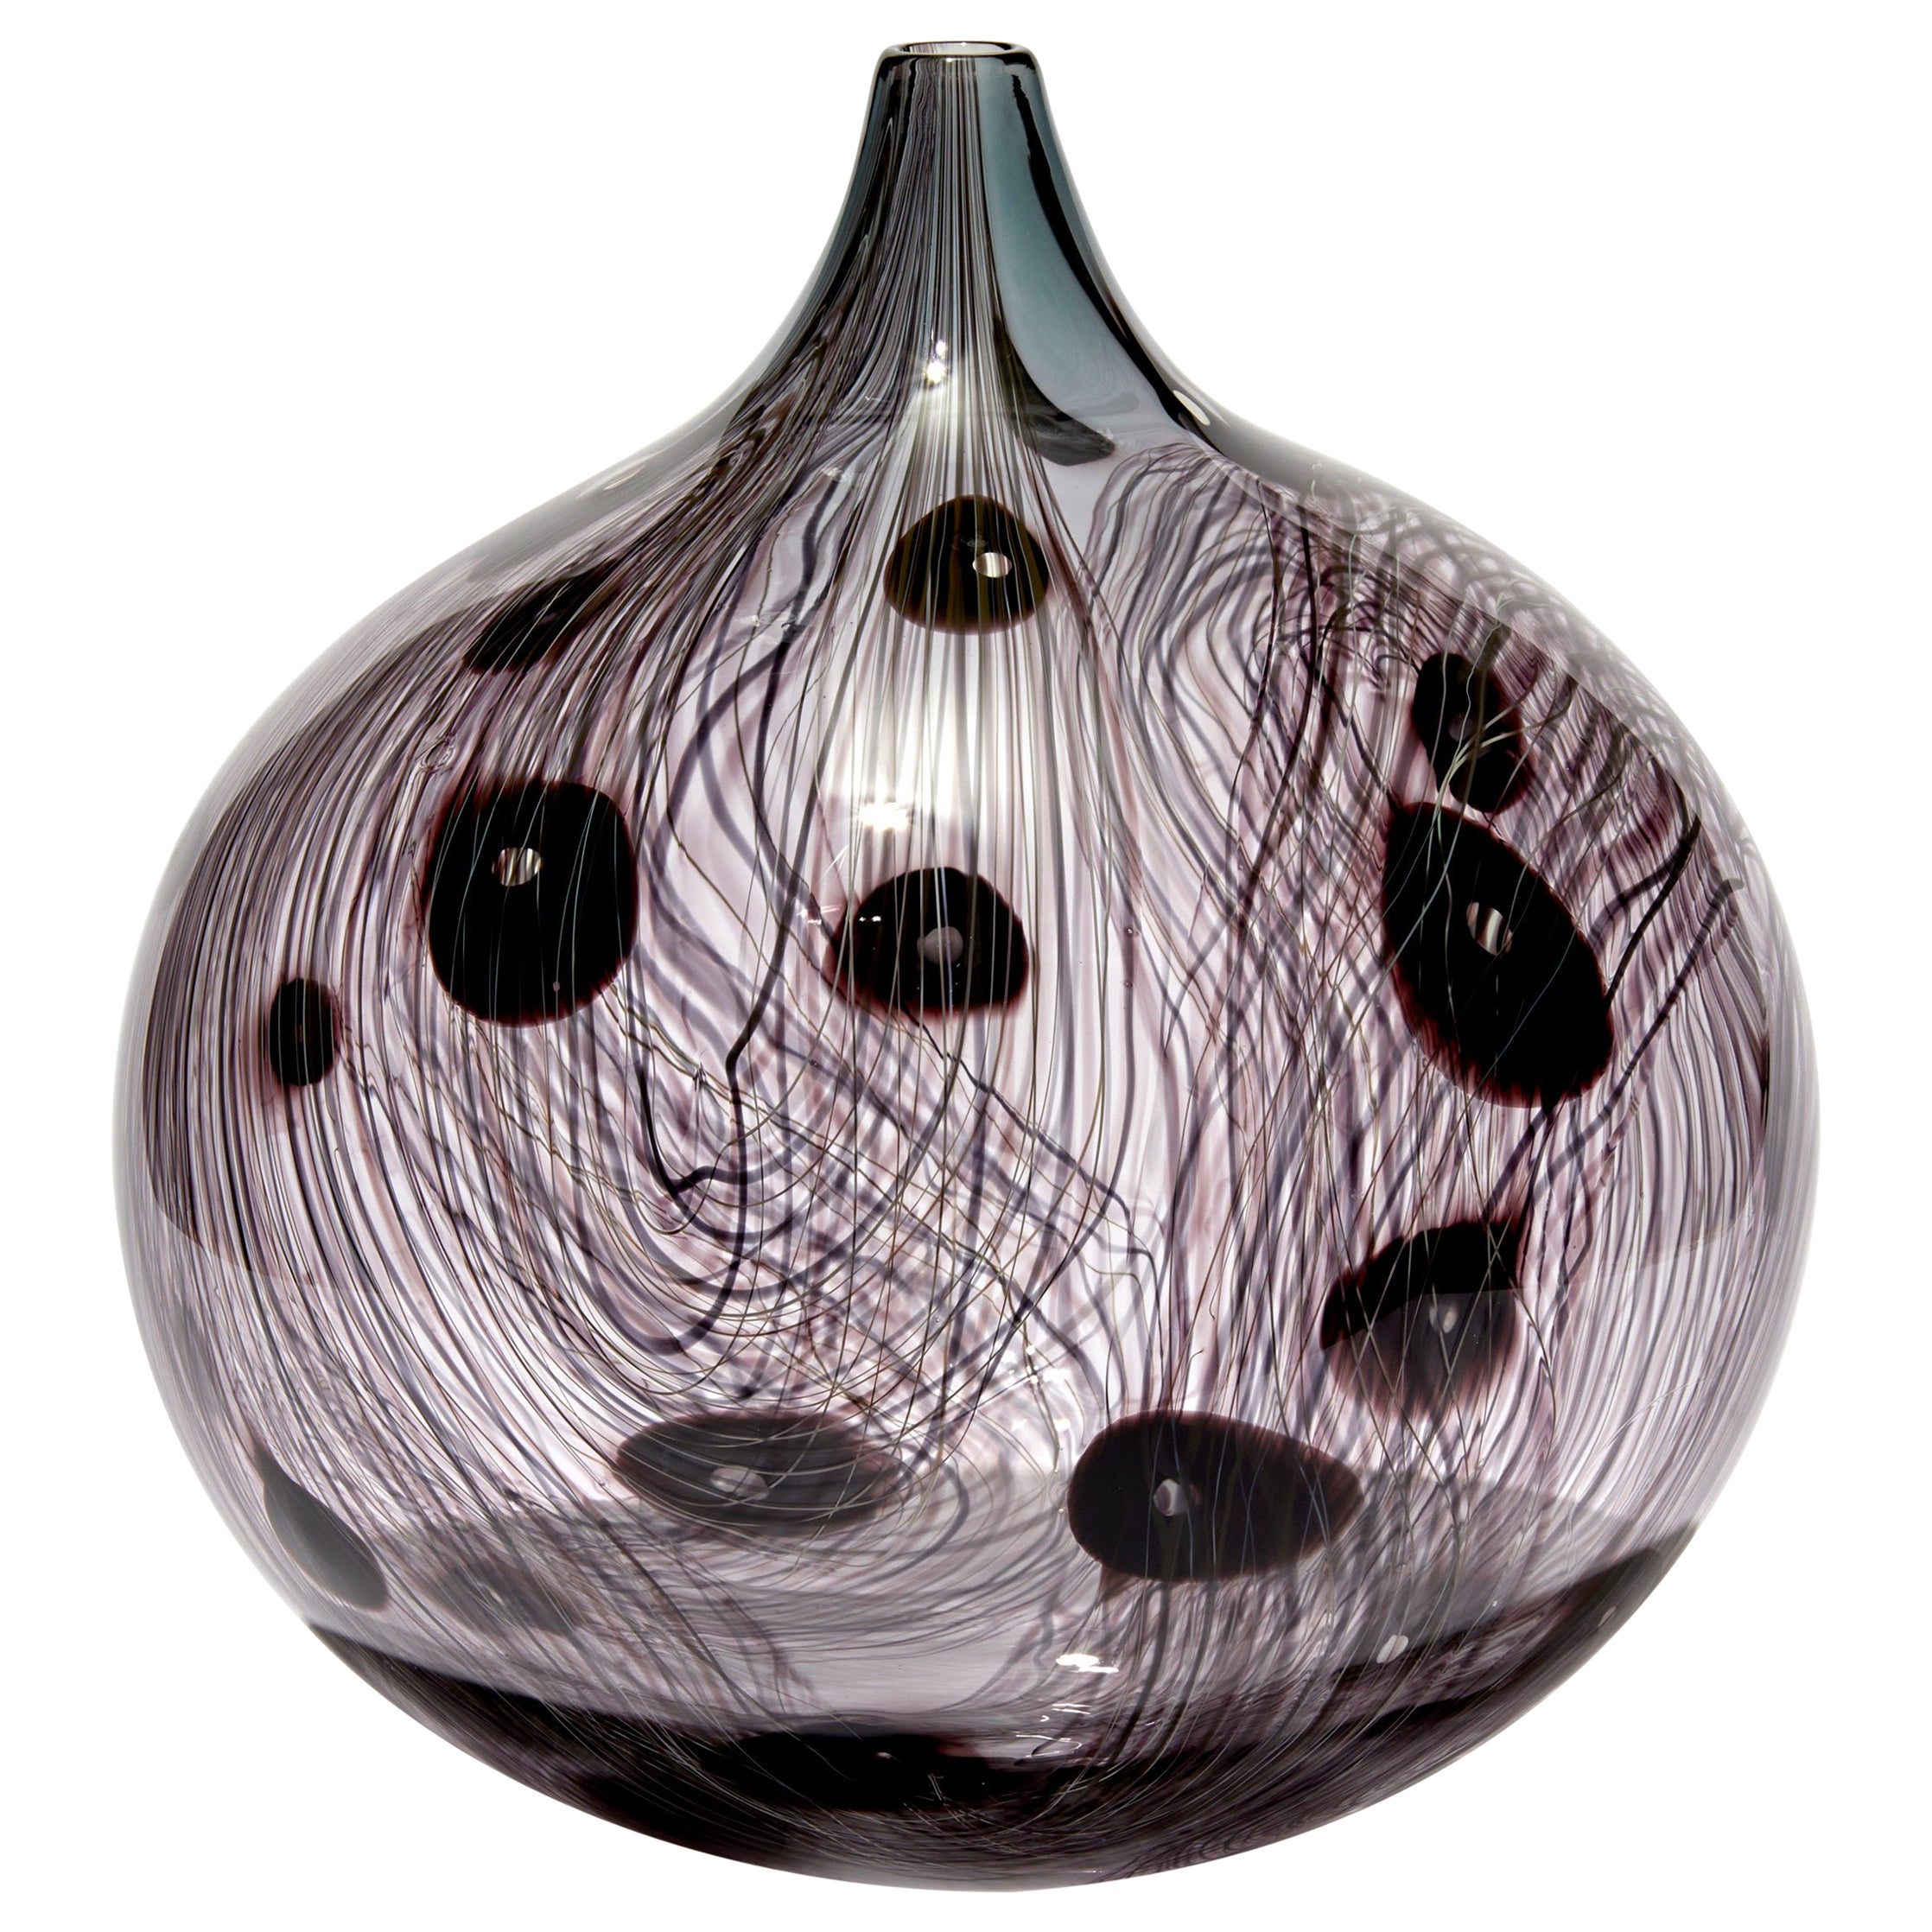 Rings v, Clear & Dark Aubergine / Purple Abstract Glass Vessel by Ann Wåhlström